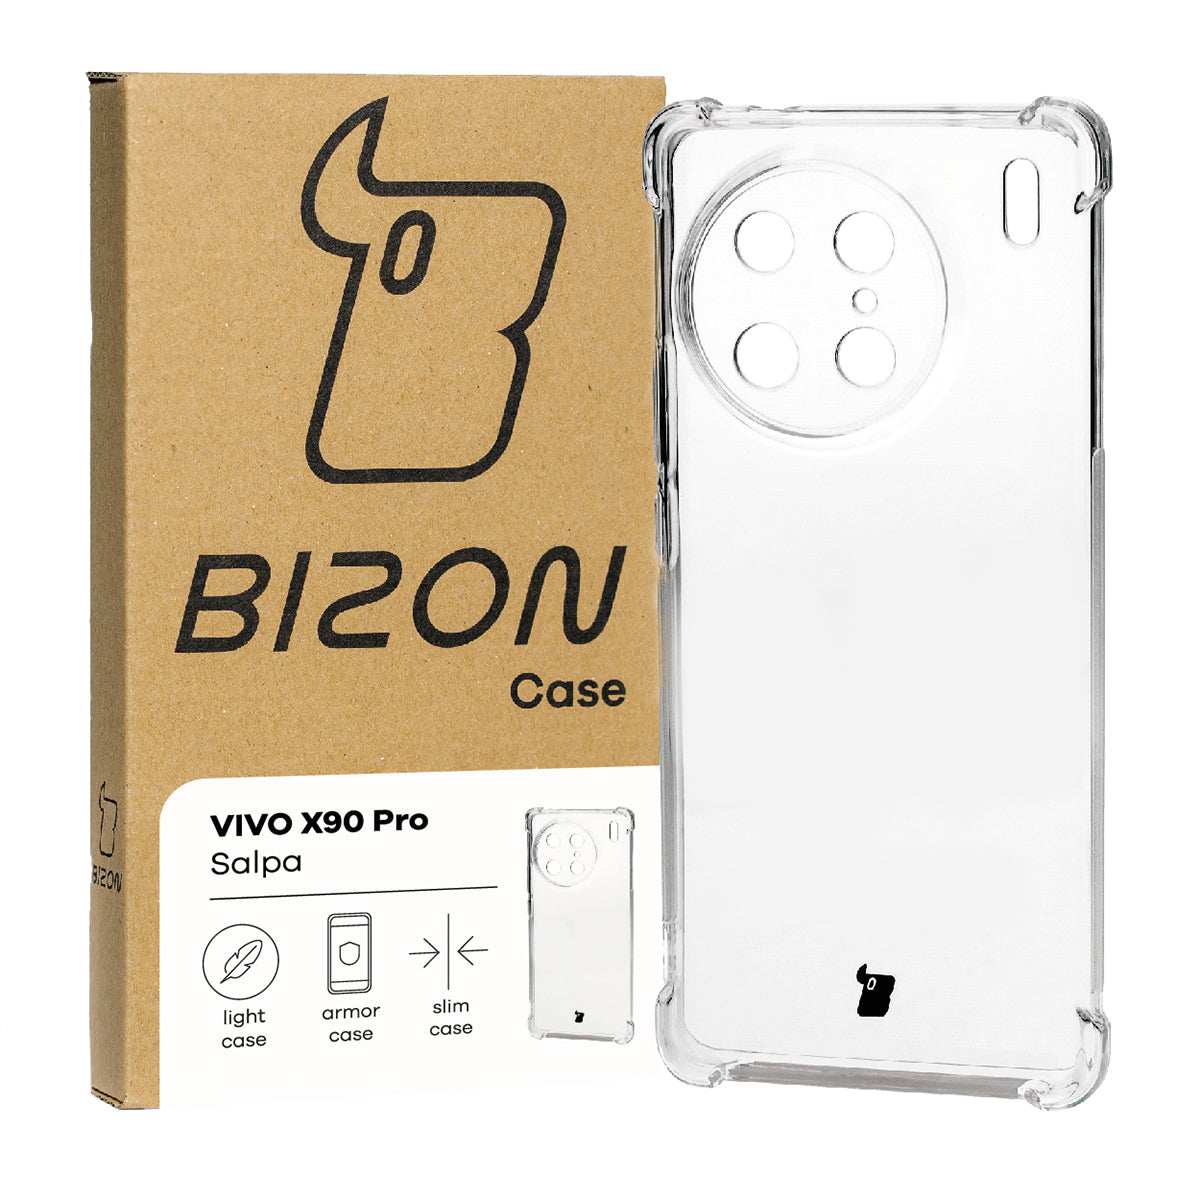 Flexible Schutzhülle für Vivo X90 Pro, Bizon Case Salpa, Transparent